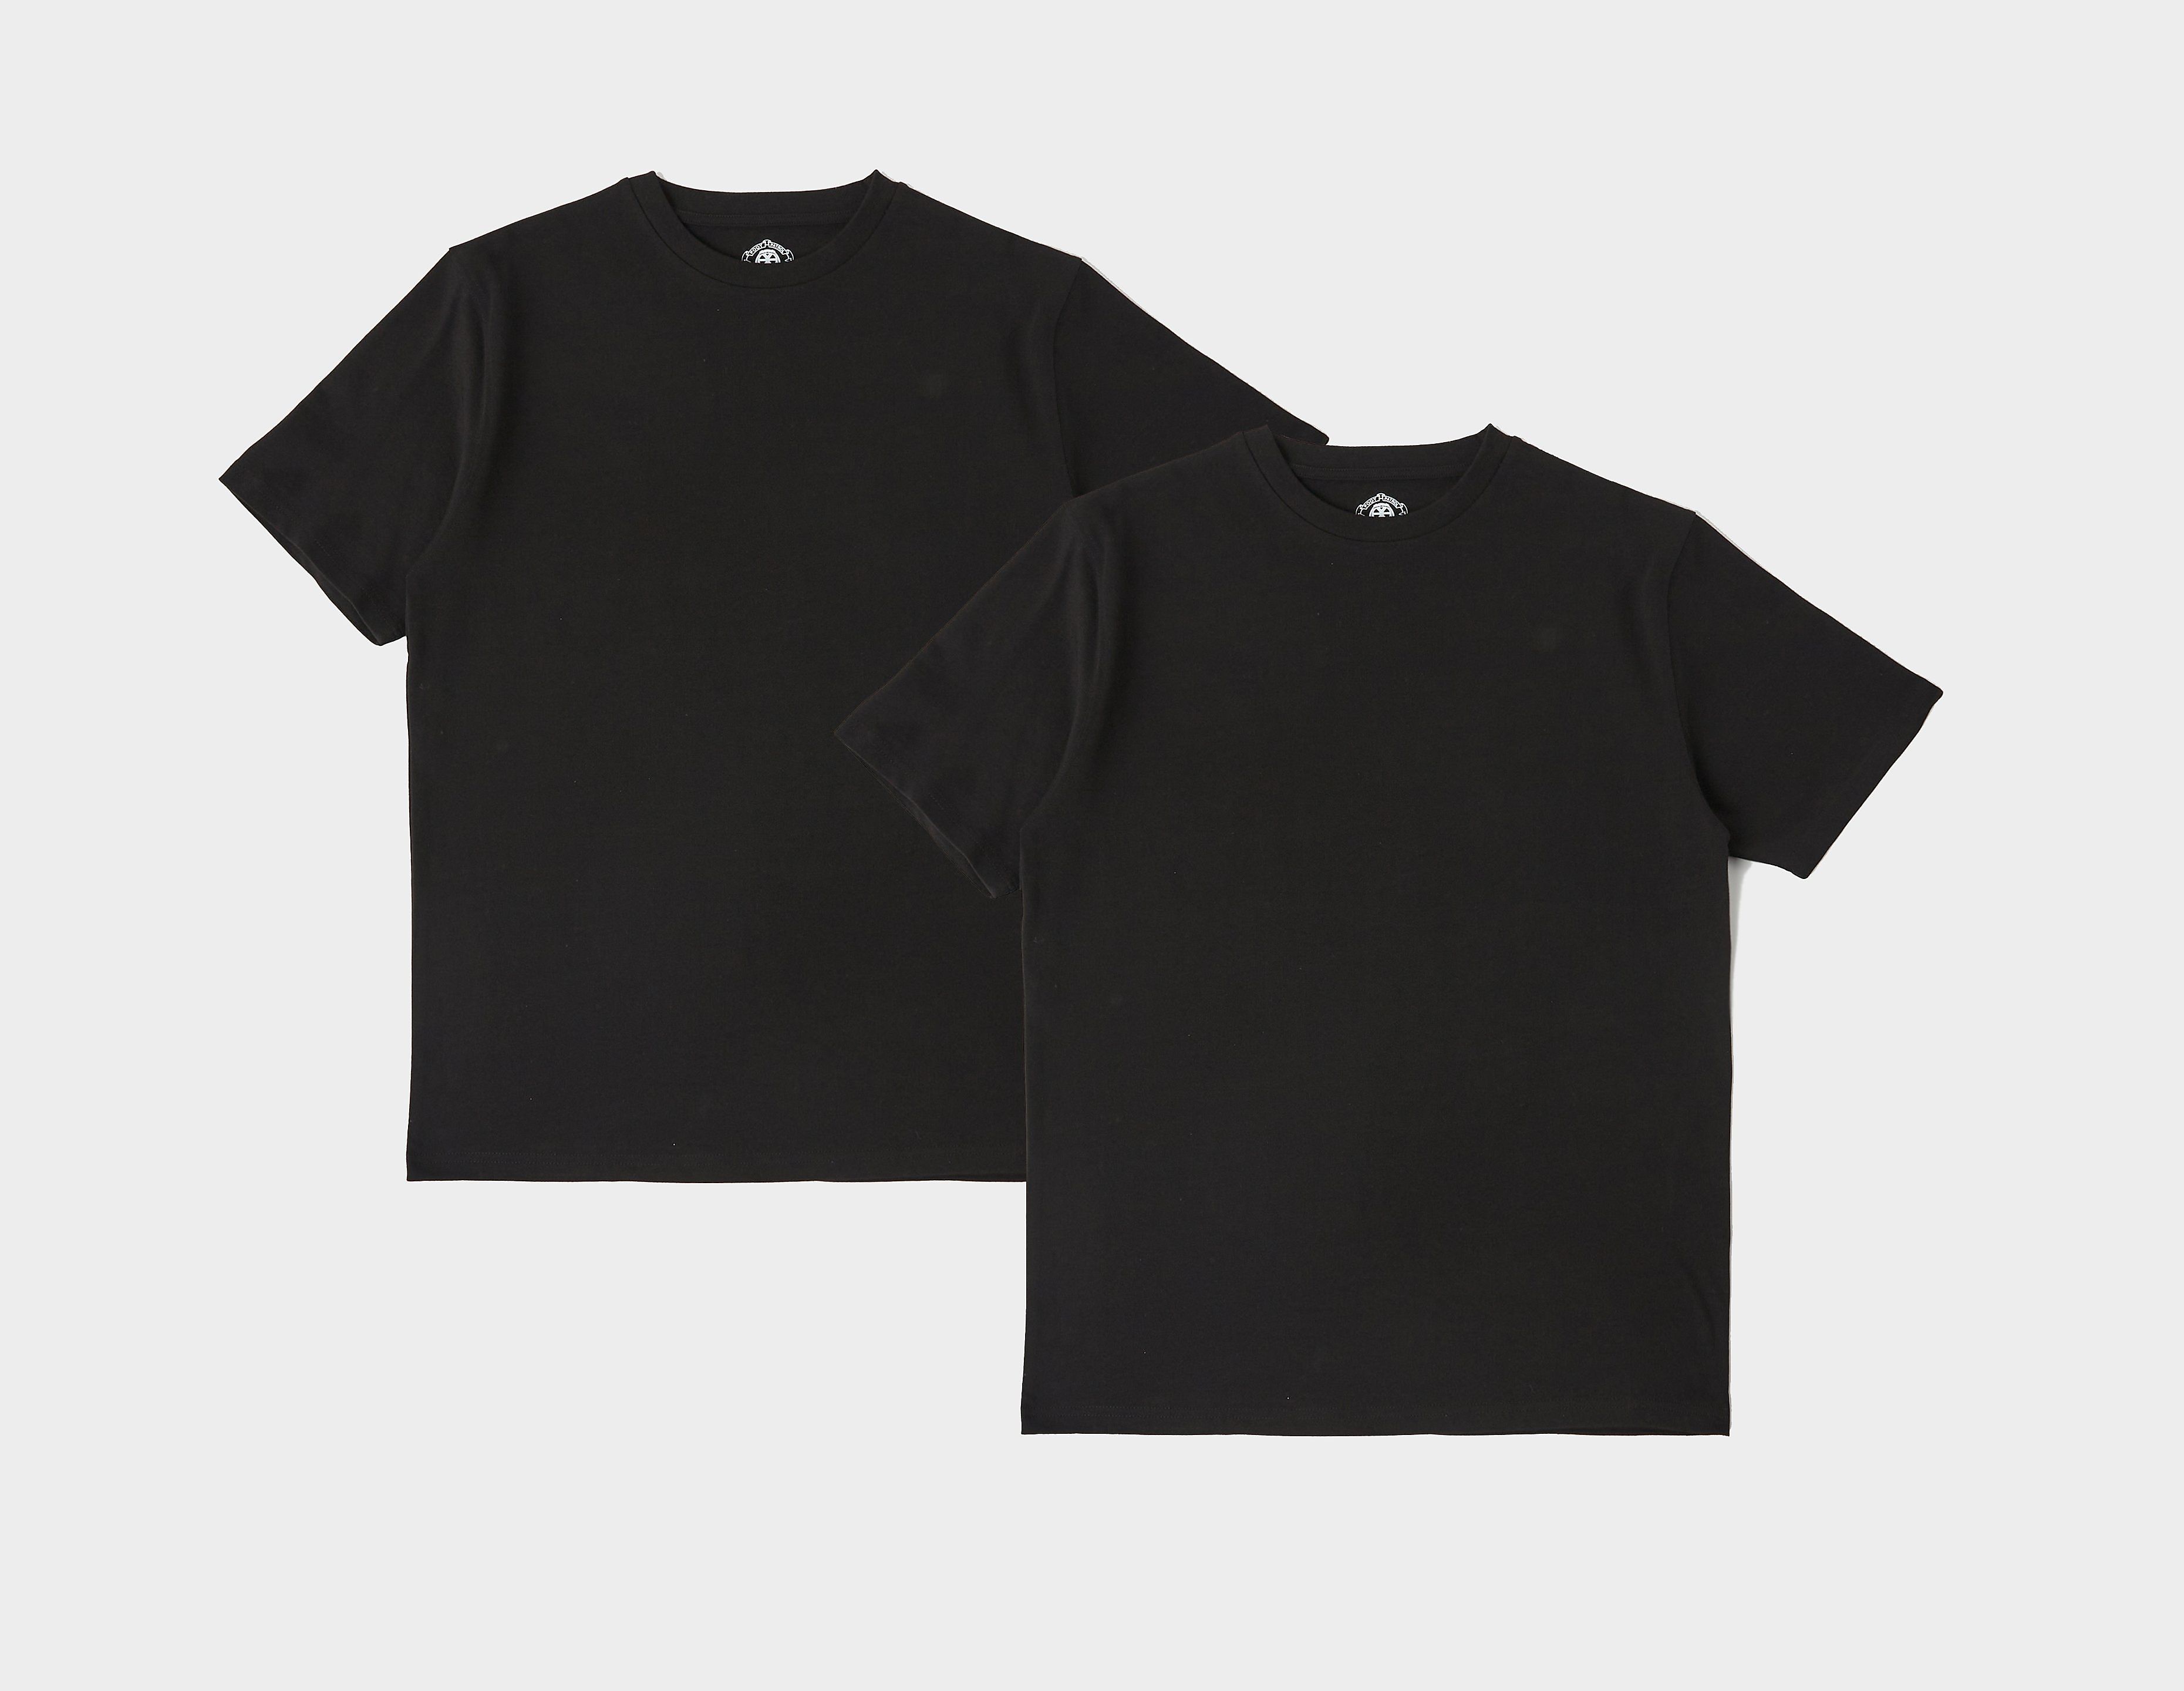 footpatrol 2-pack blank t-shirts - black, black